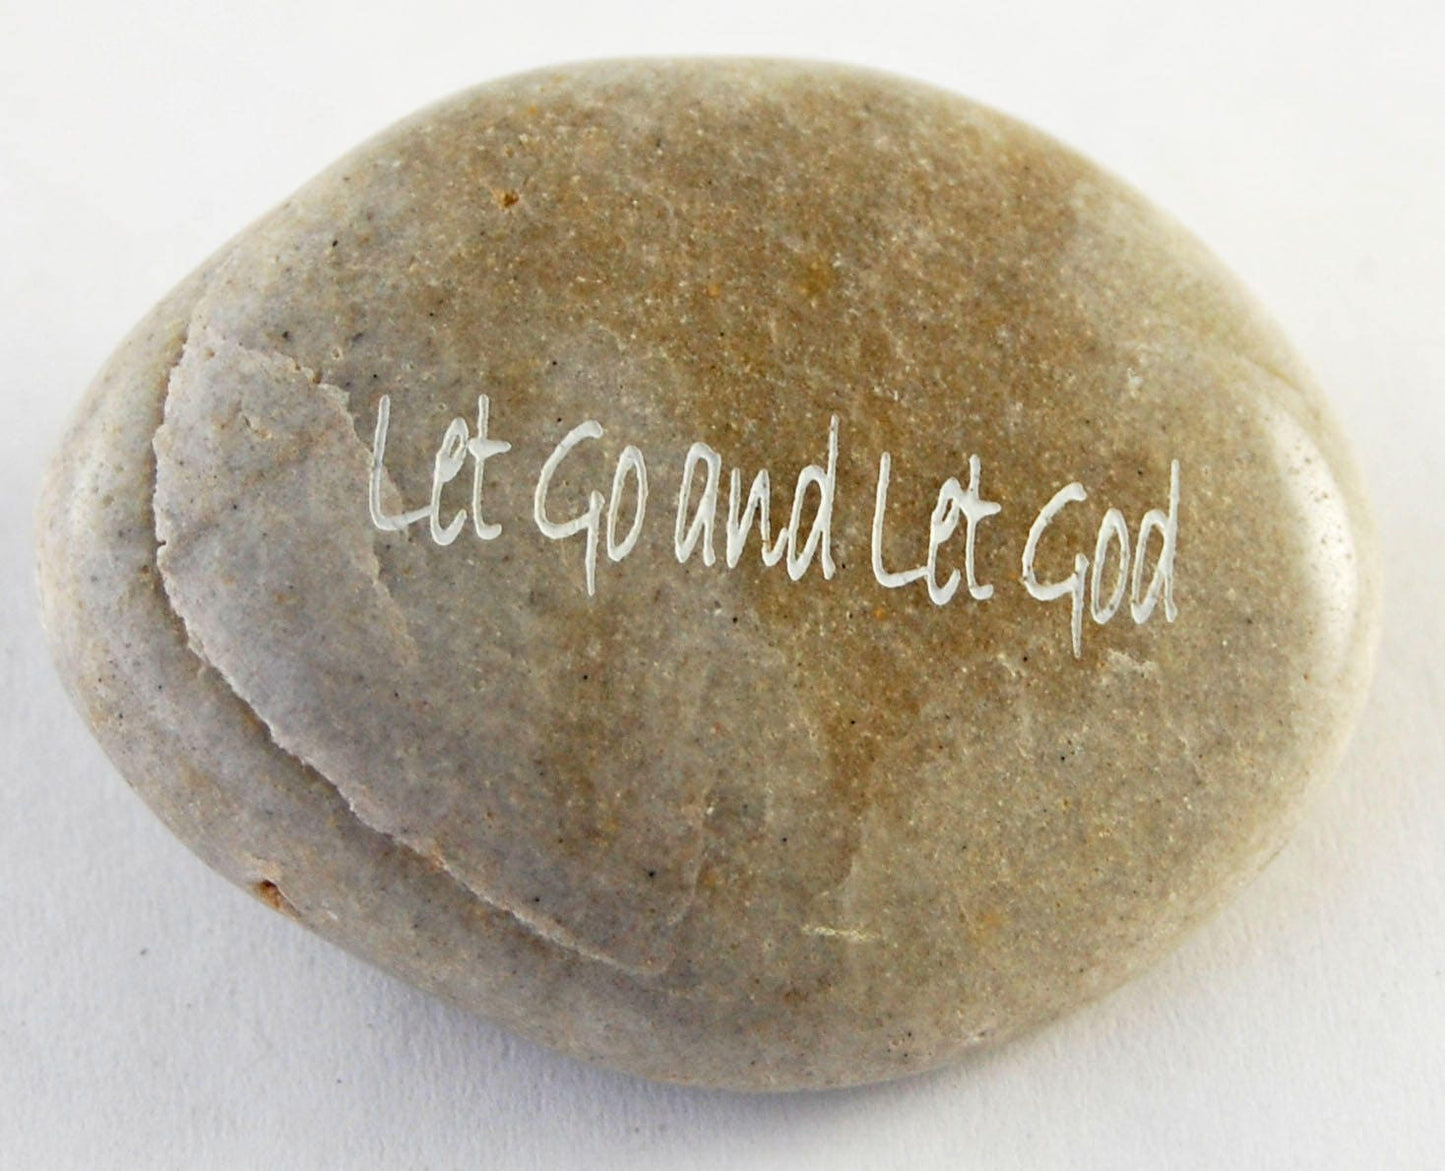 Let Go and Let God - Engraved River Rock Inspirational Word Stone